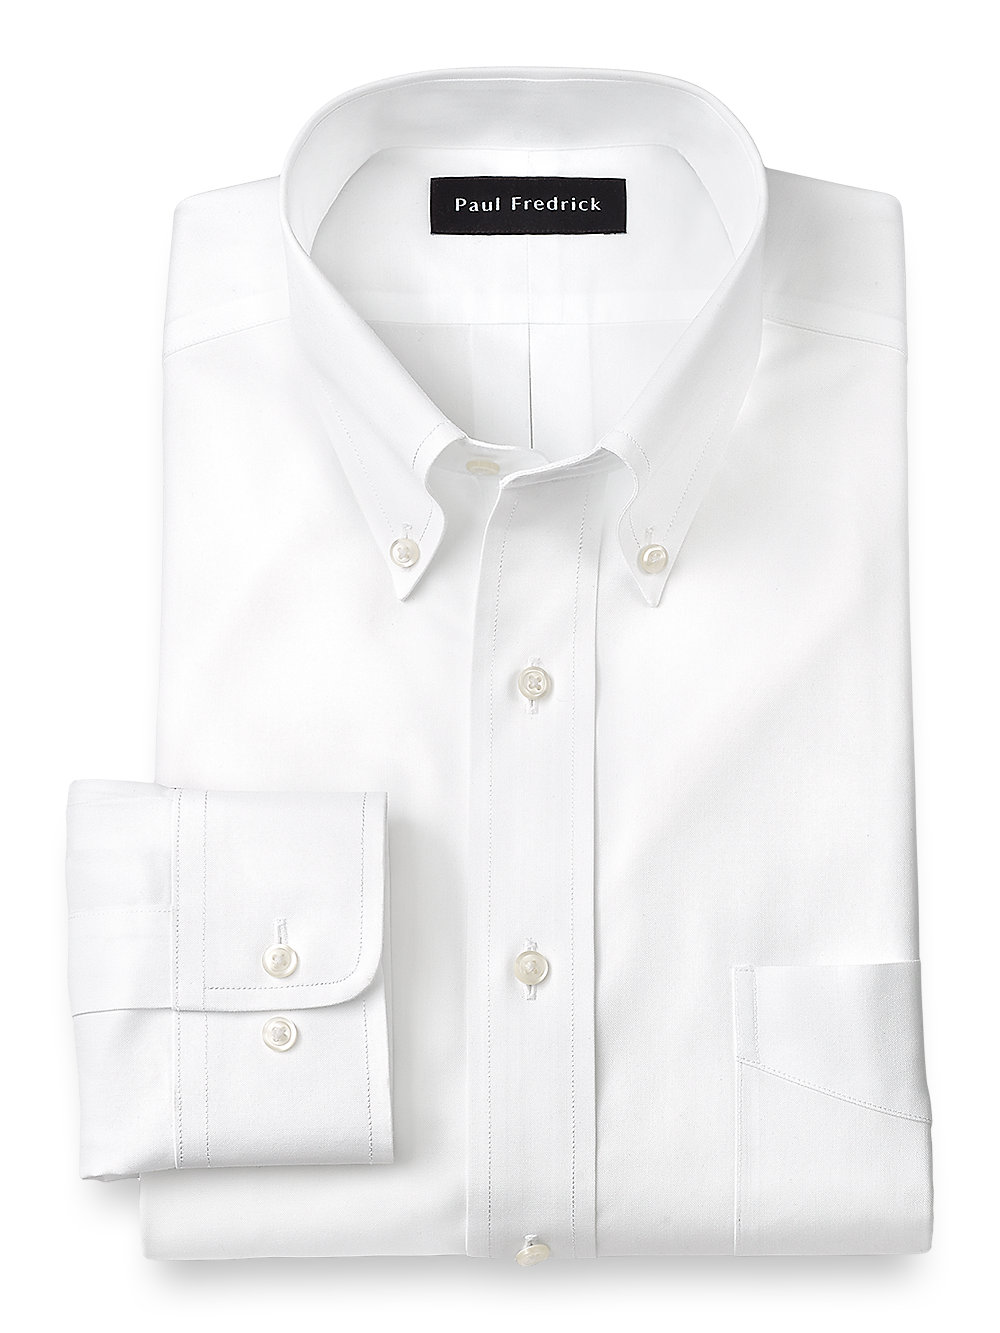 Paul Fredrick Mens Slim Fit Non-Iron Cotton Button Down Collar Dress Shirt Black 16.5/37 